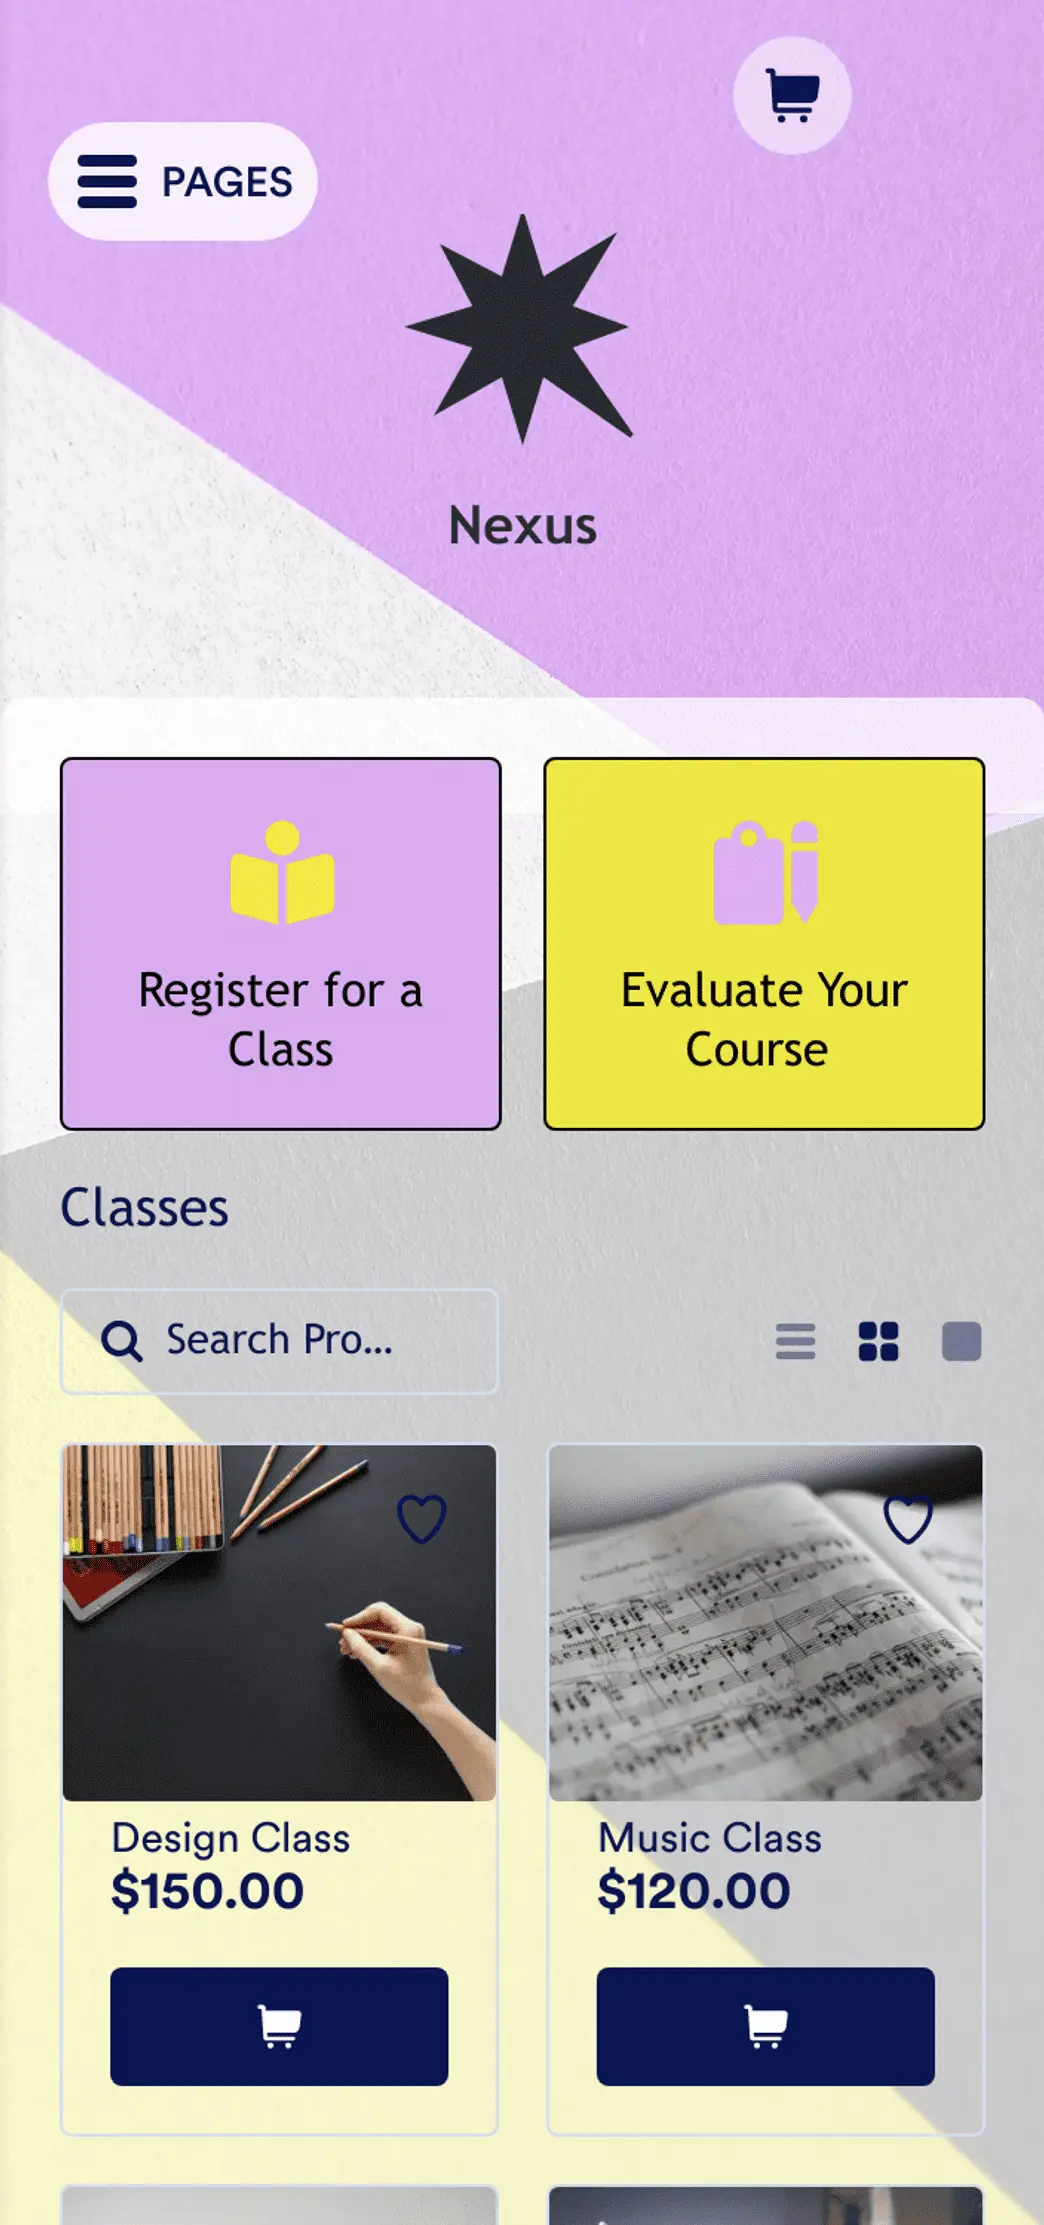 Class Scheduling App